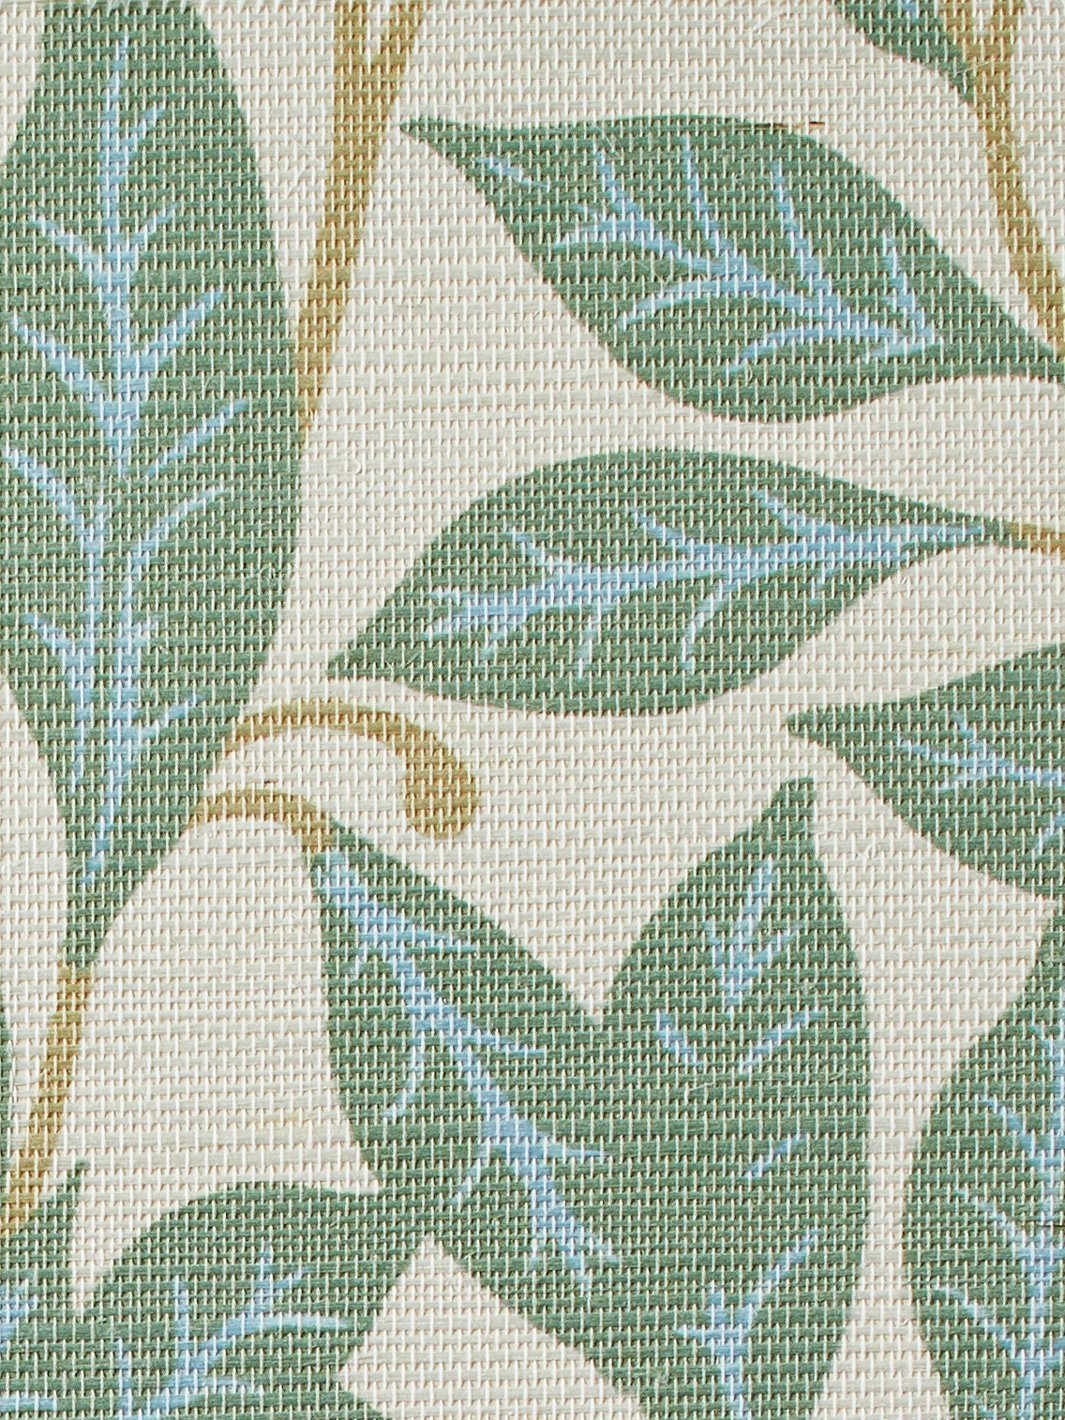 'Orchard Leaves' Grasscloth' Wallpaper by Wallshoppe - Green